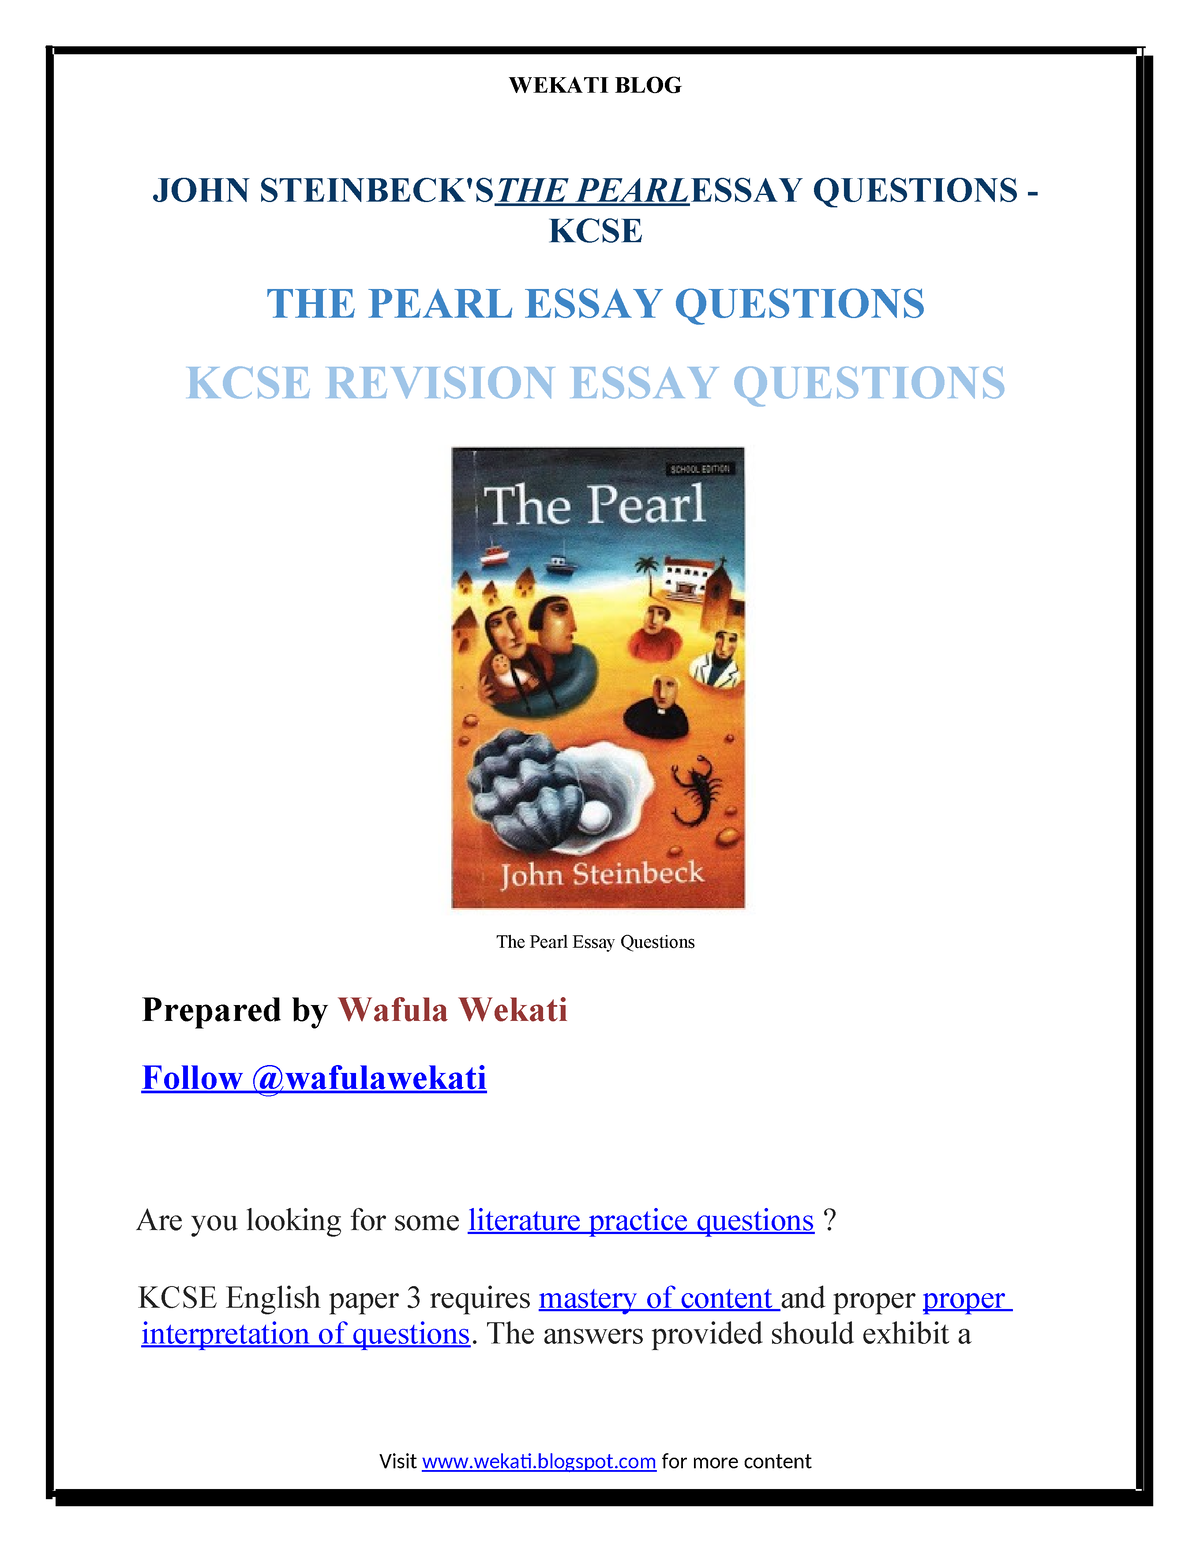 kcse essays on the pearl